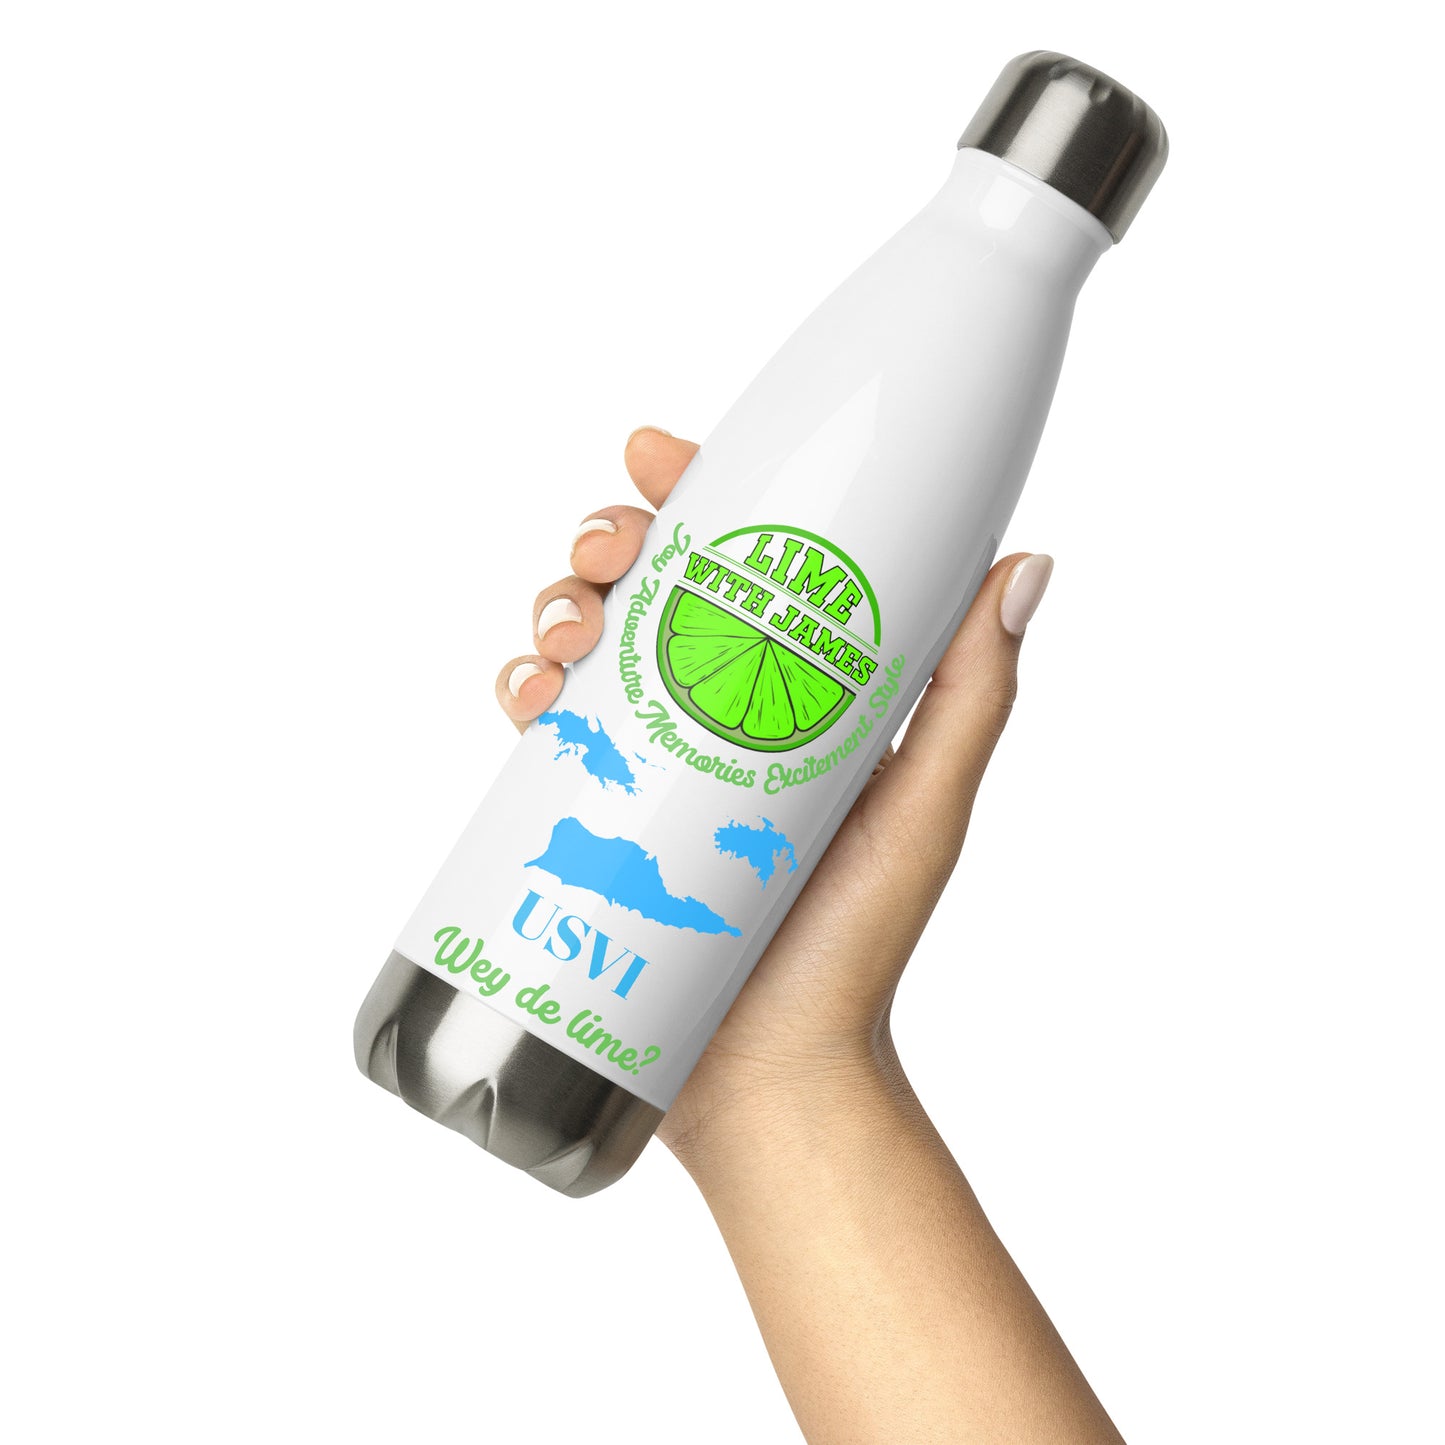 USVI lime Stainless steel water bottle